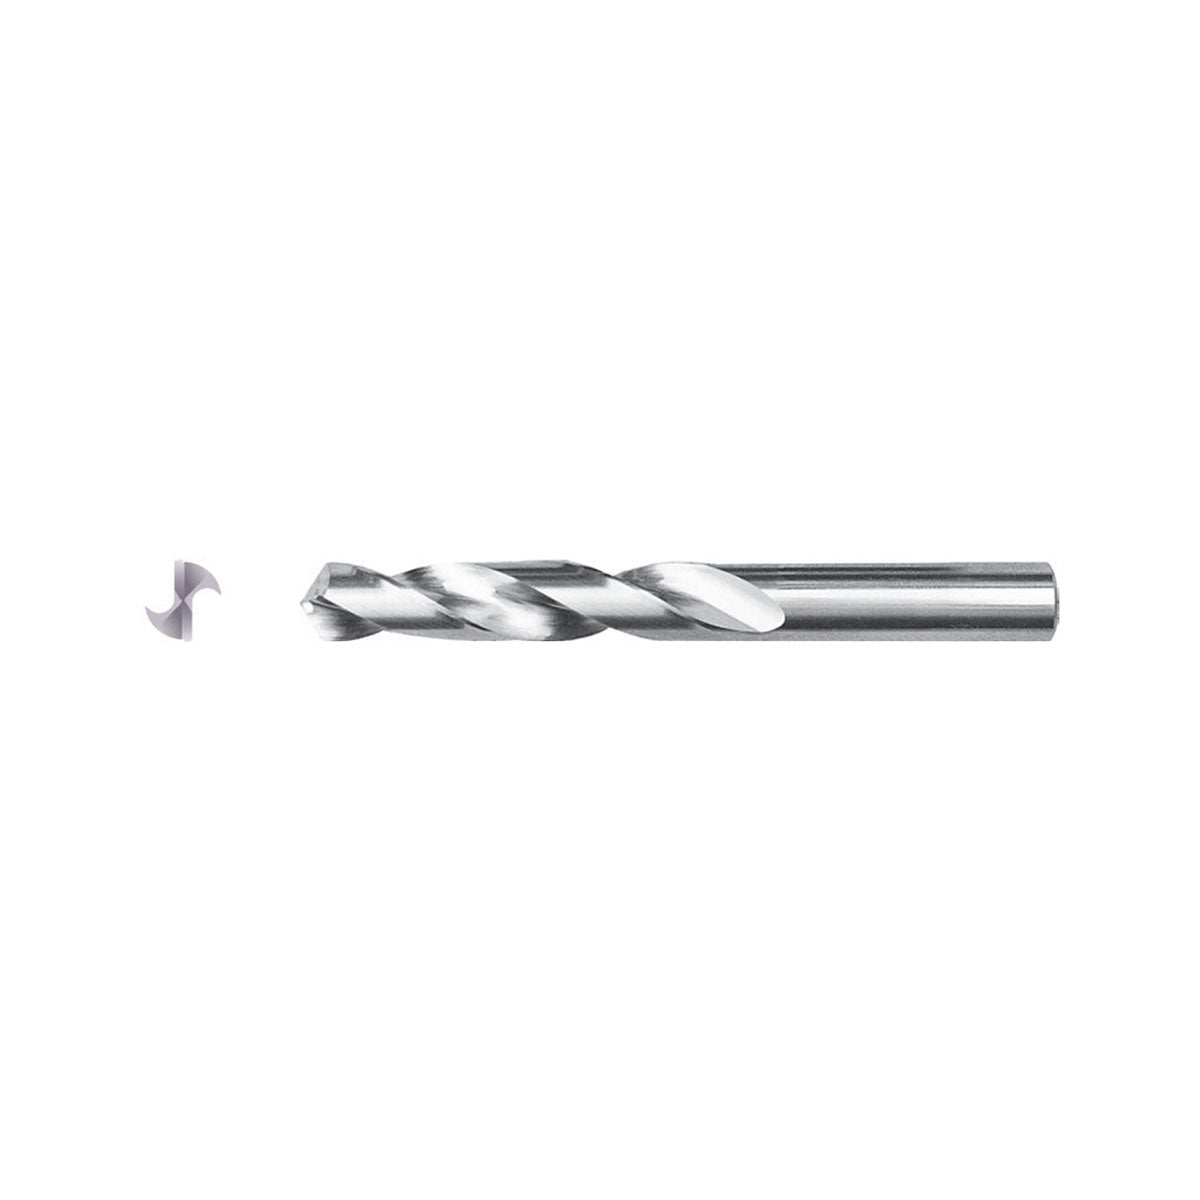 Solid carbide drills SC drill 3xD Non-ferrous metals 1105SC03-(0200~1020) - Makotools Industrial Supply Tools for Metal Cutting